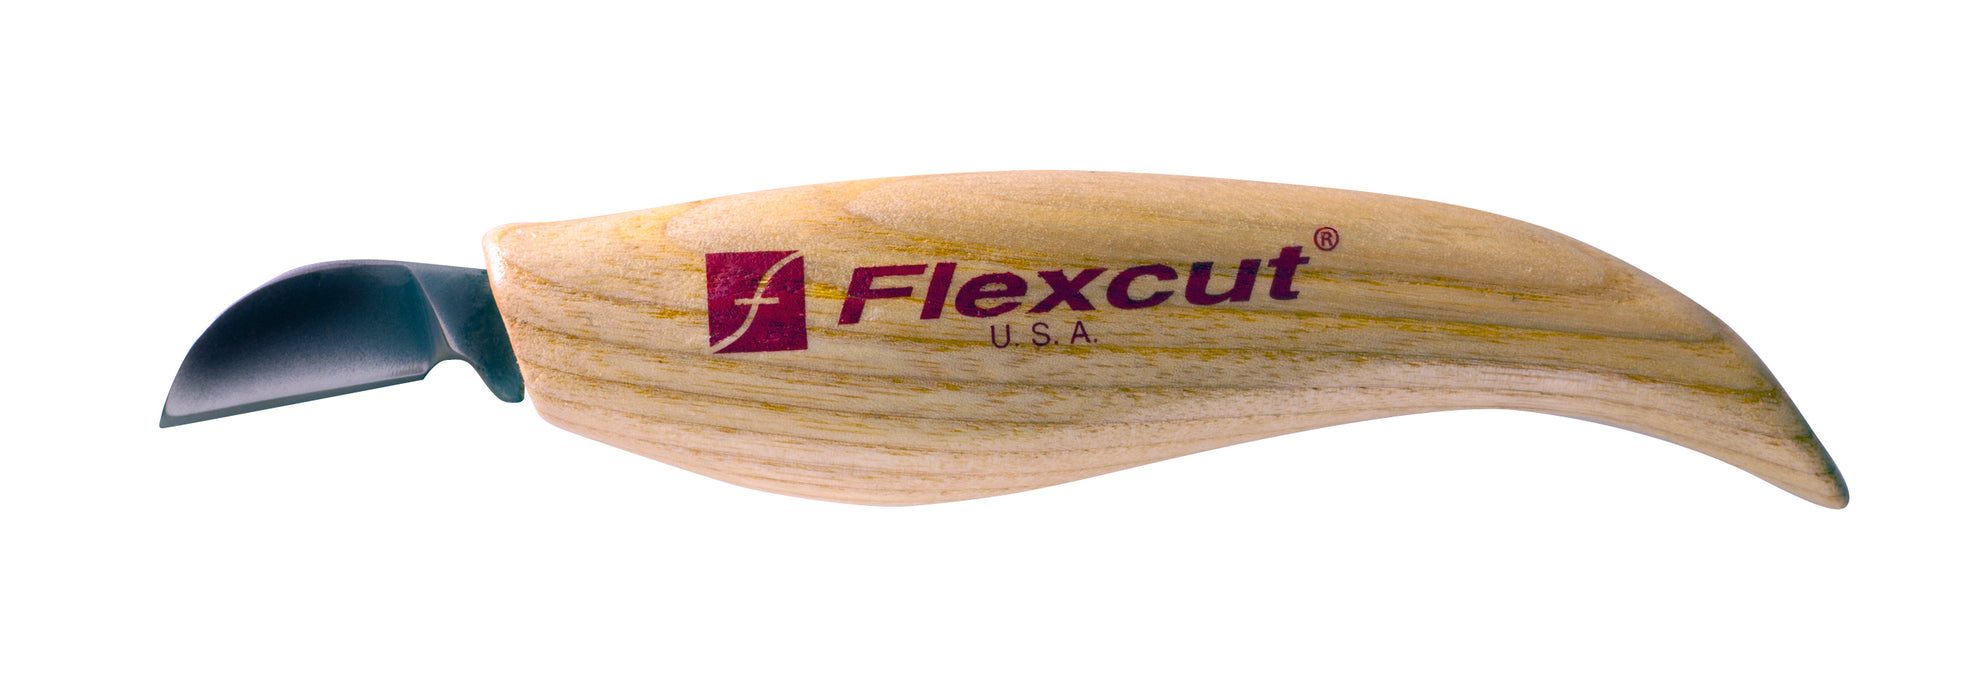 Flexcut Chip Carving  Knife